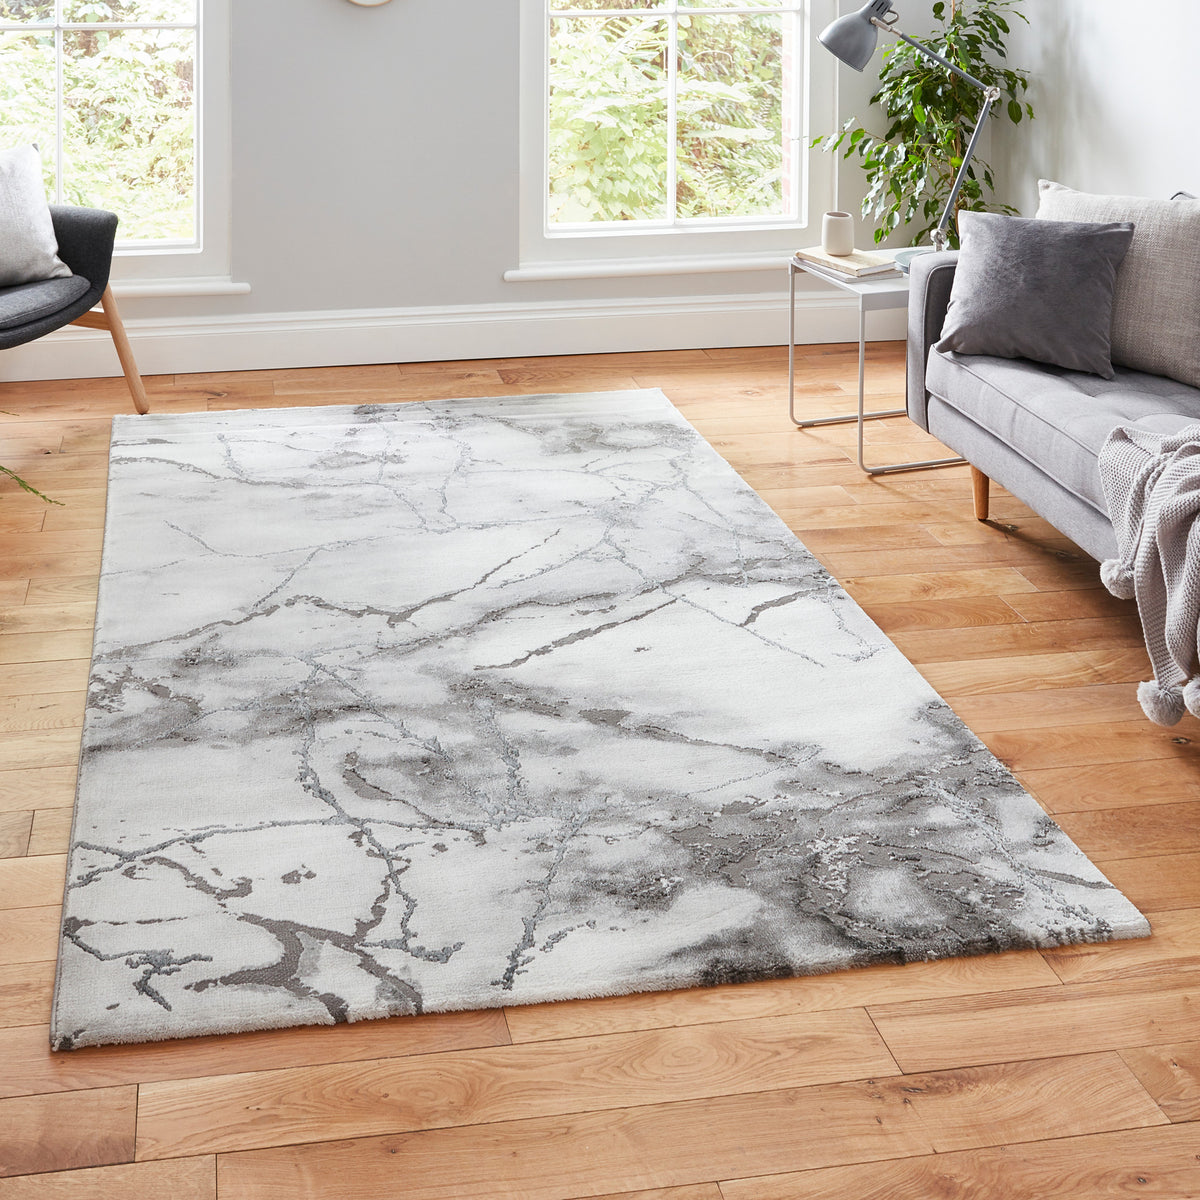 Fenway Silver Marble Effect Super Soft Rug for living room